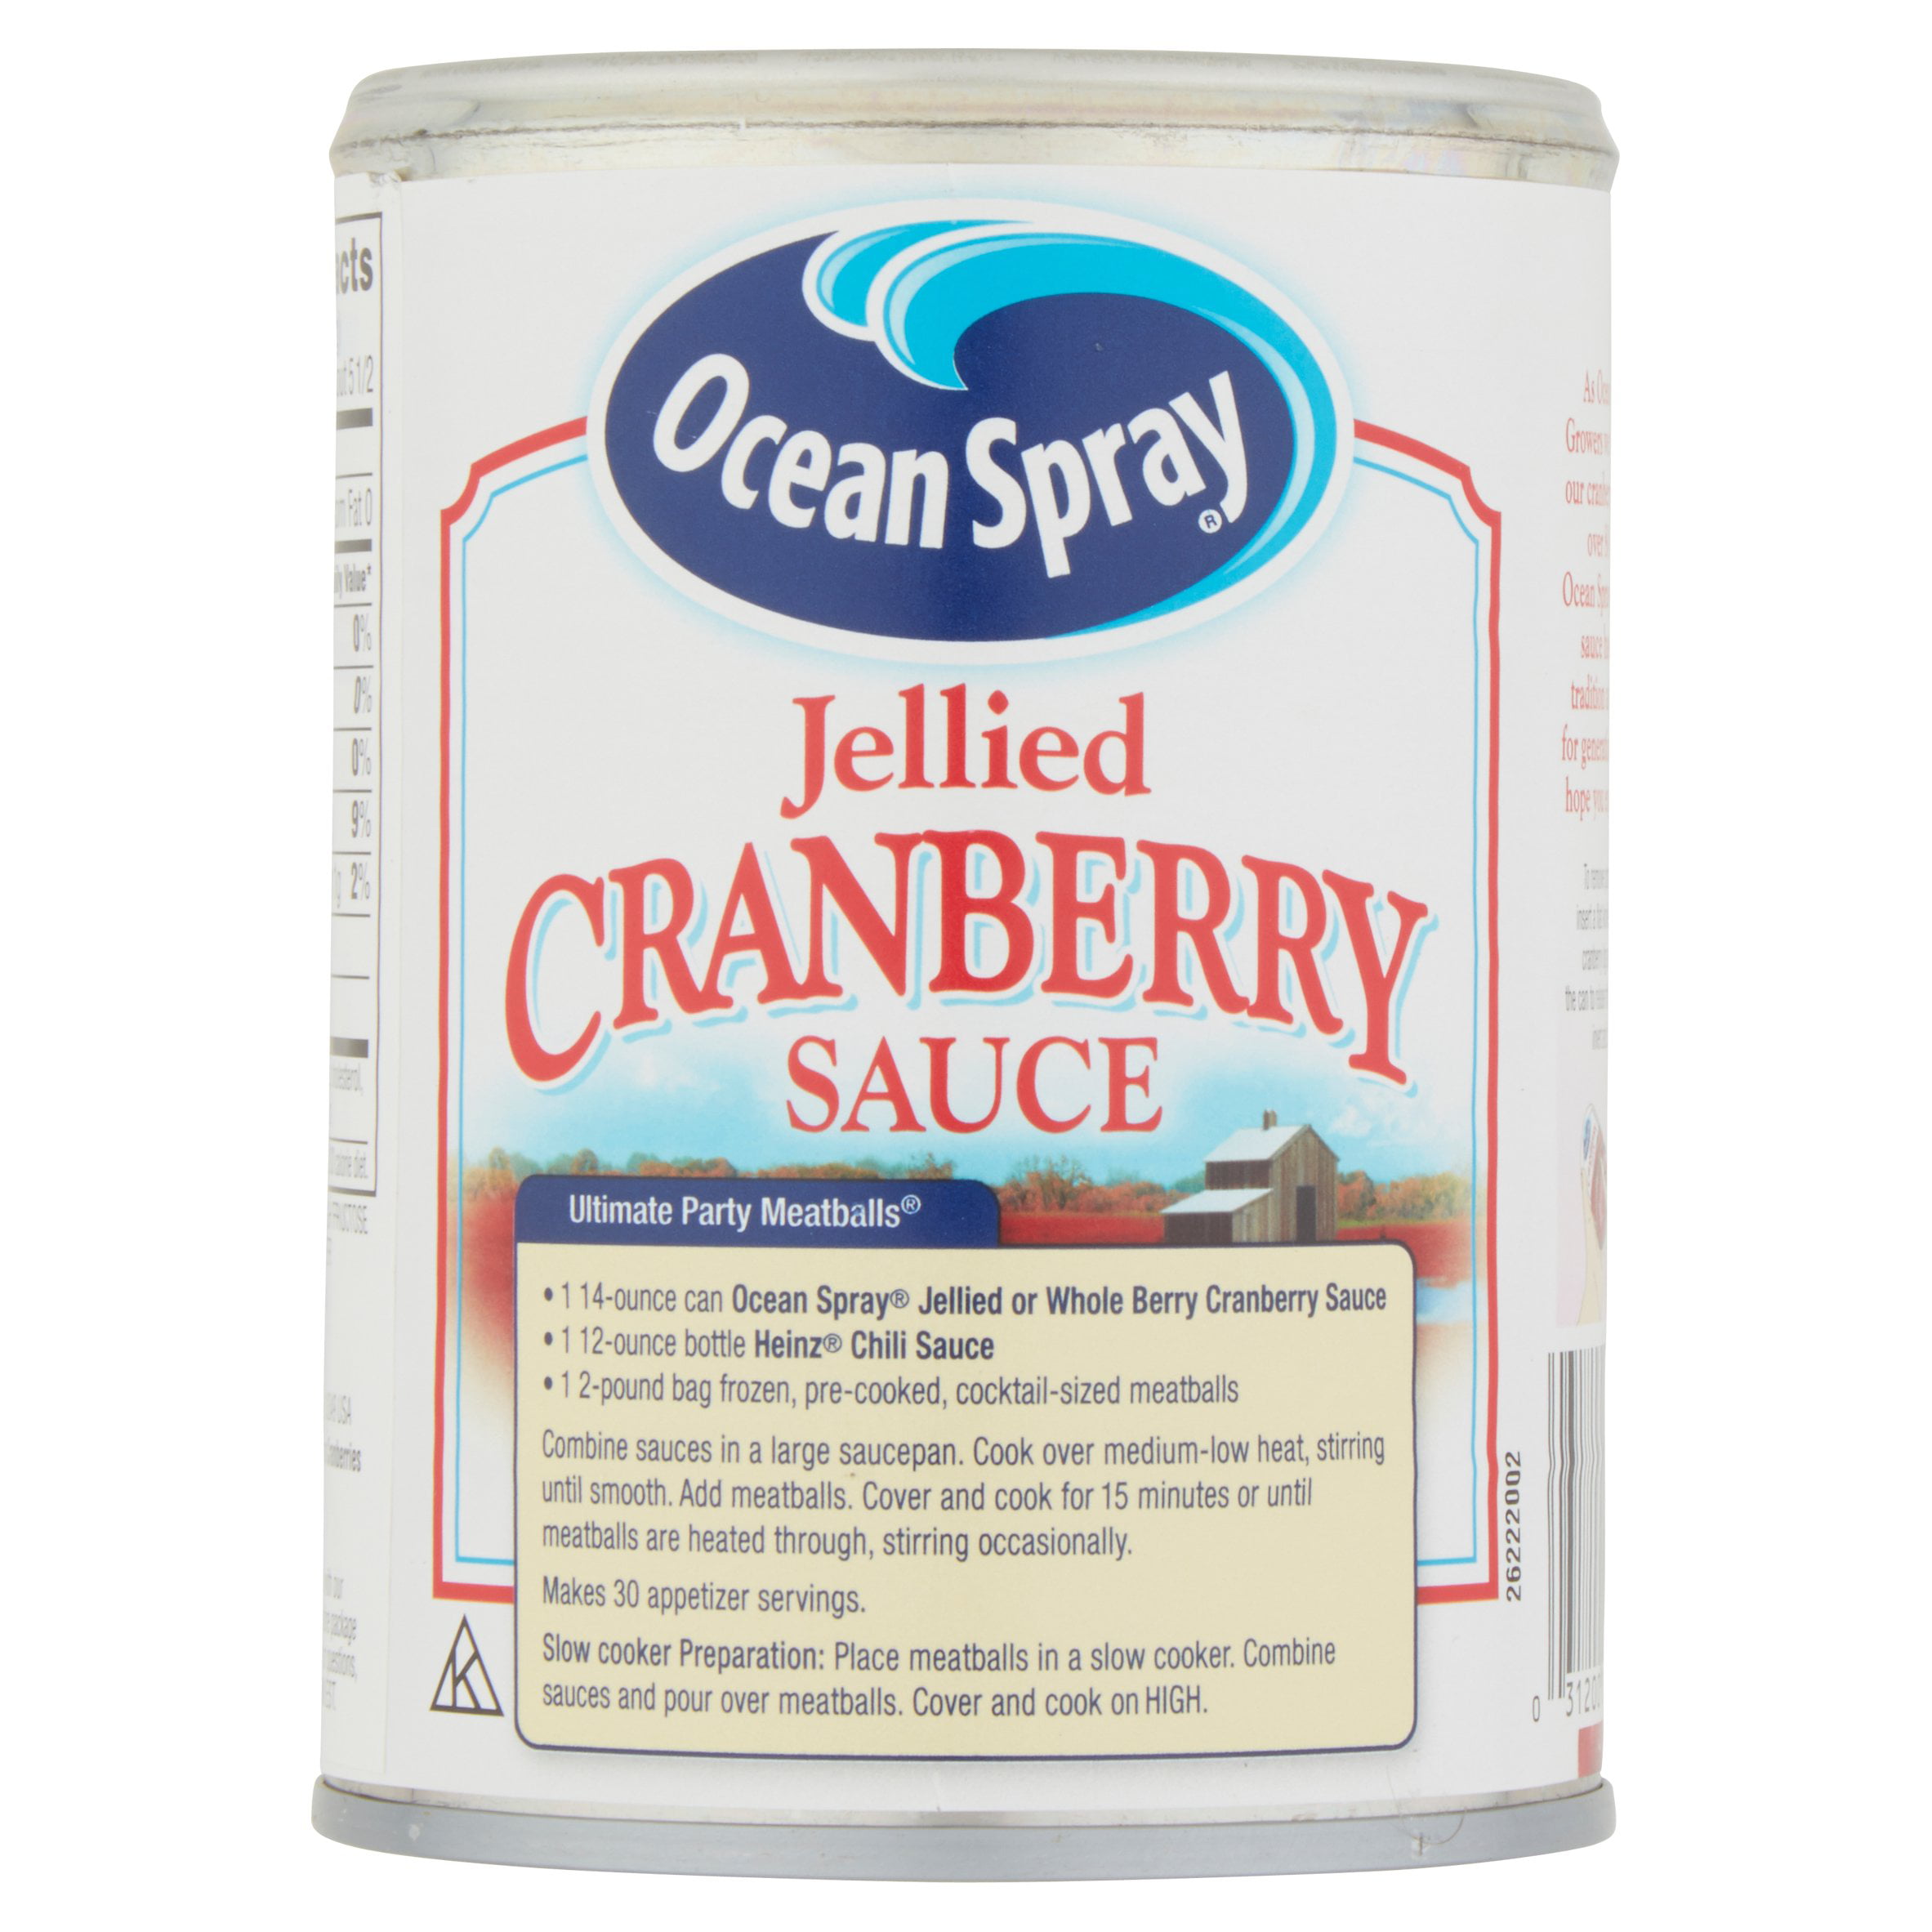 Ocean Spray Cranberry Sauce Recipe On Bag : Thanksgiving ...